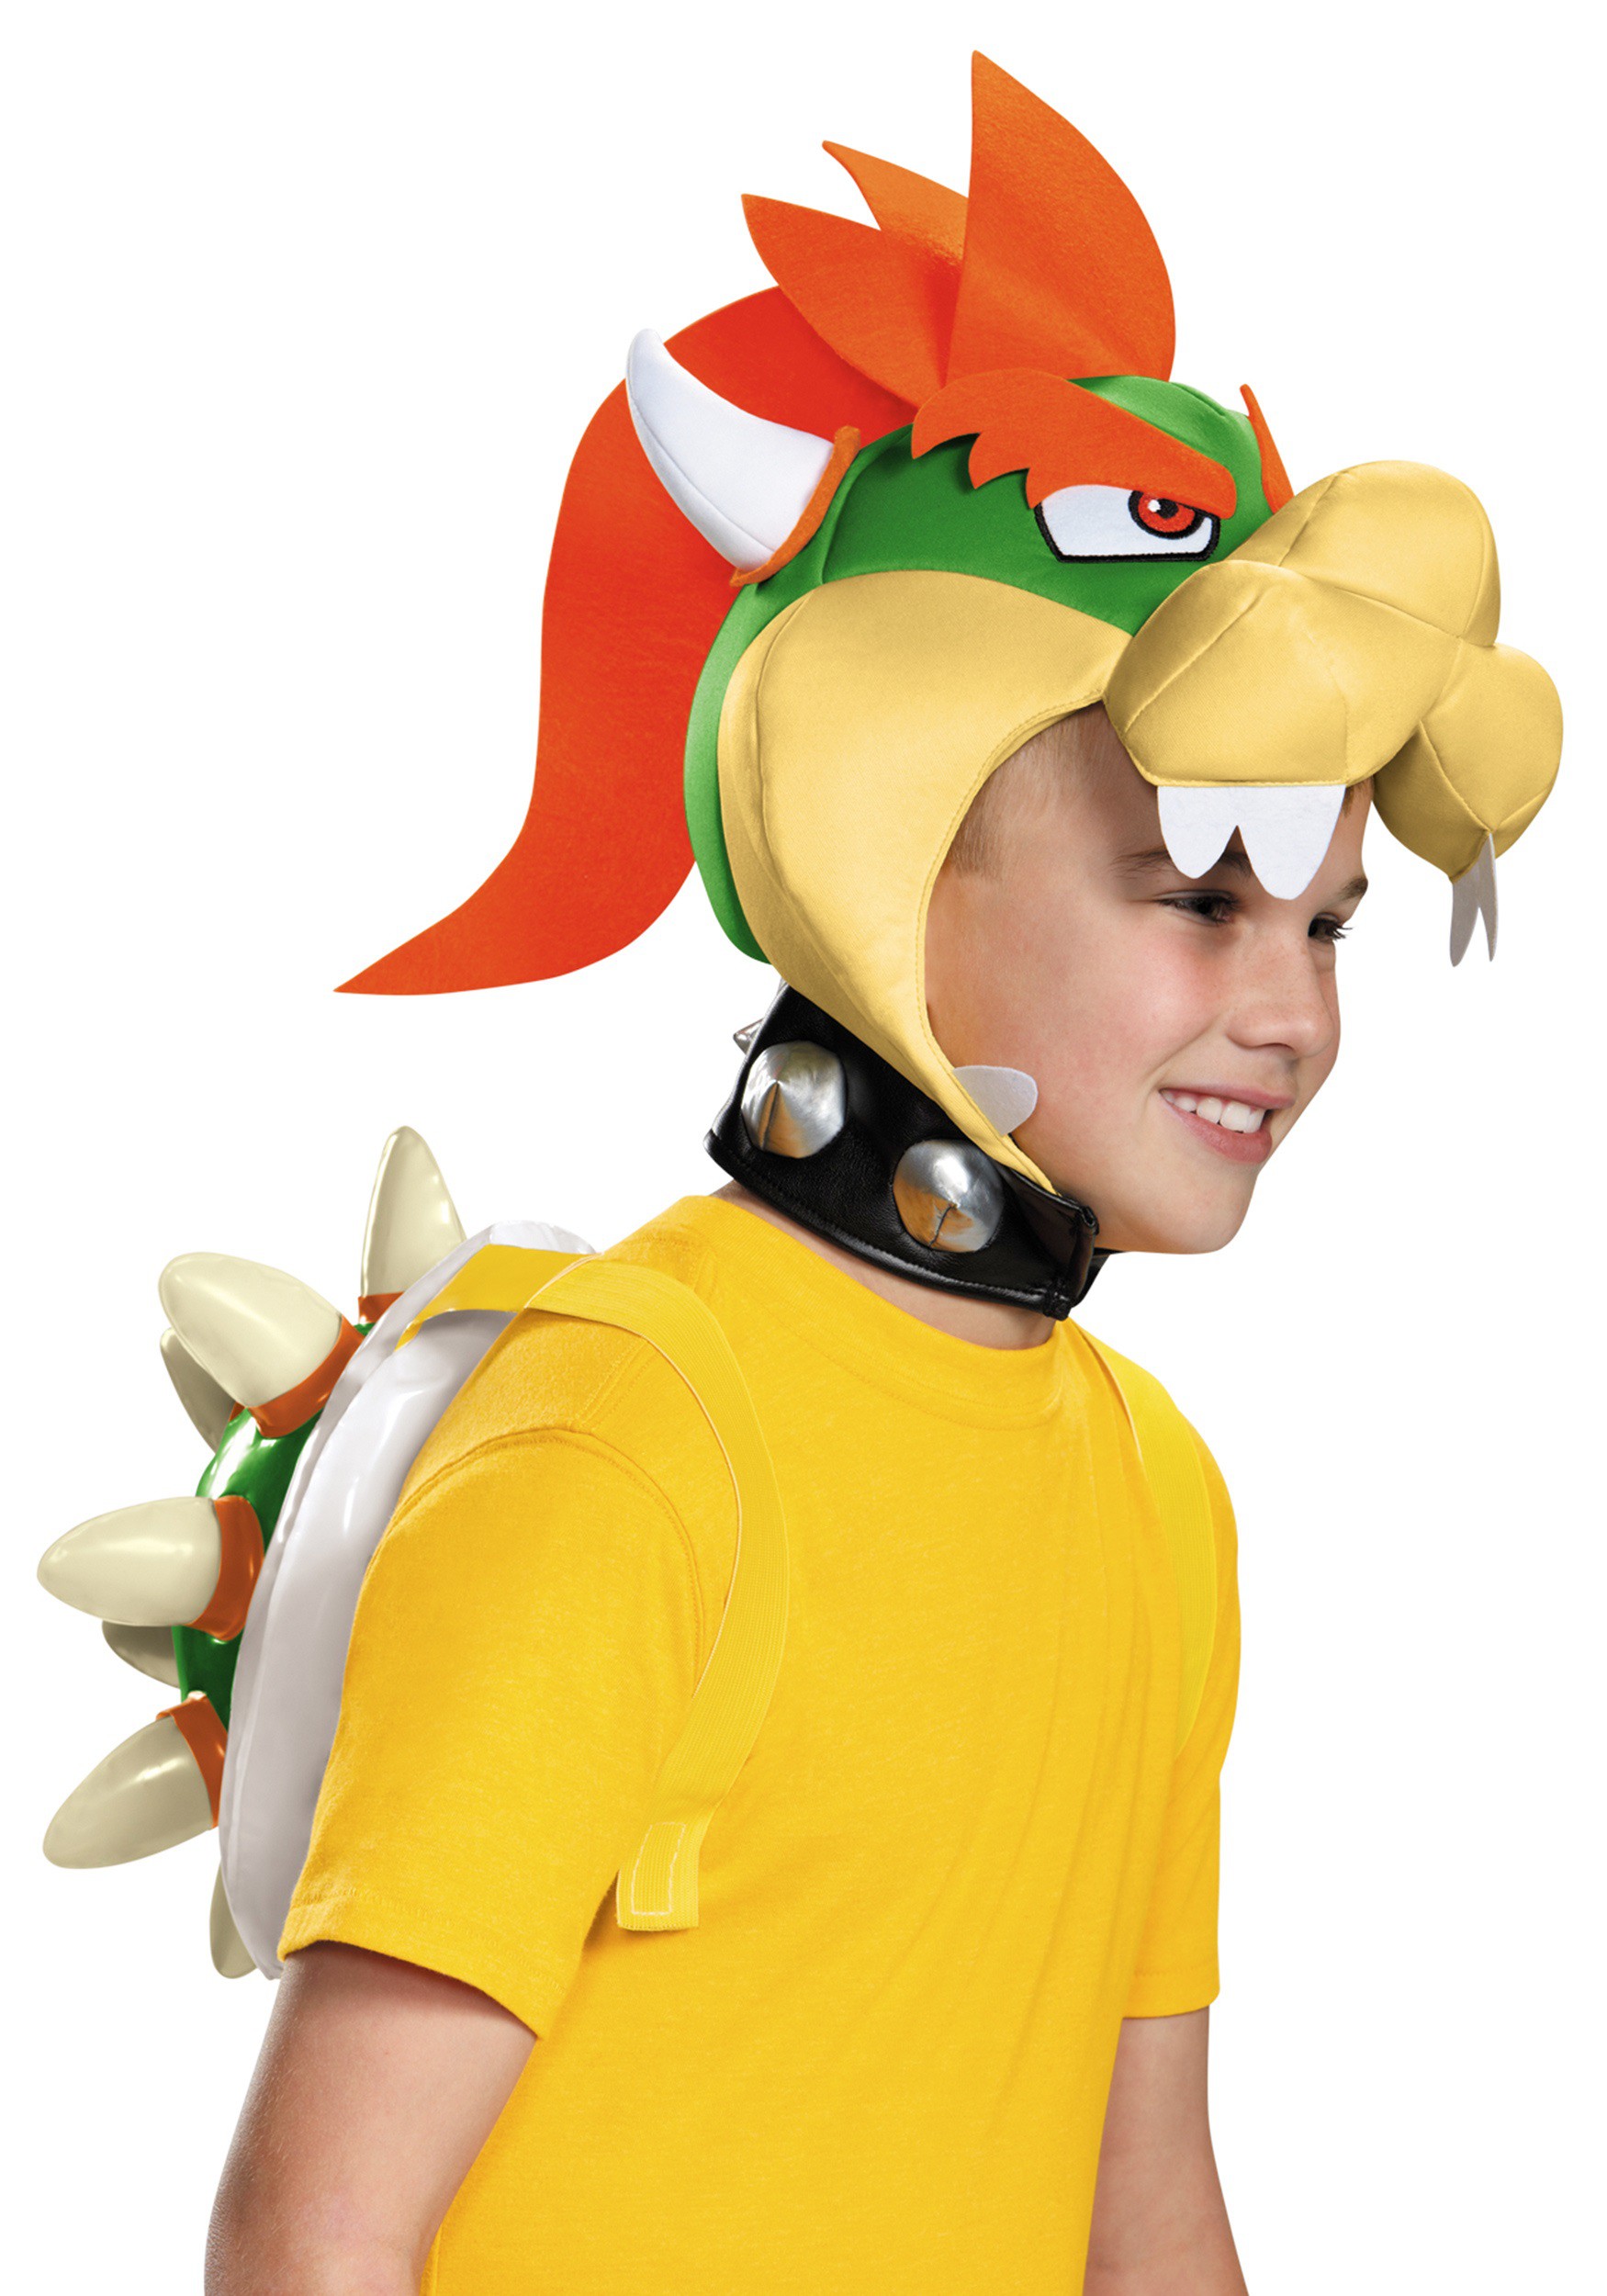 Boy's Bowser Super Mario Costume. The coolest